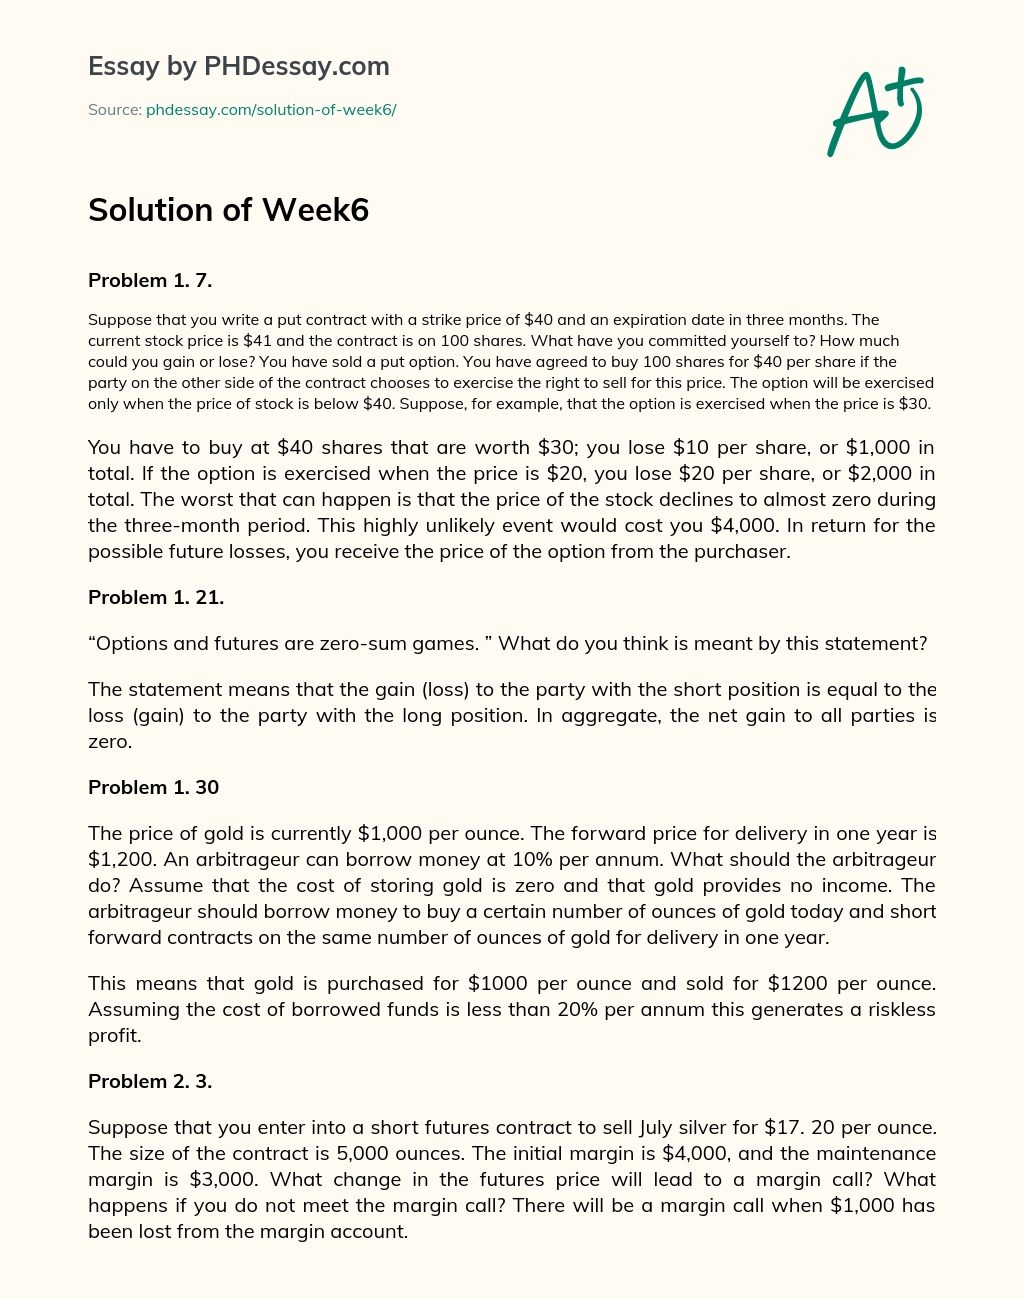 Solution of Week6 essay